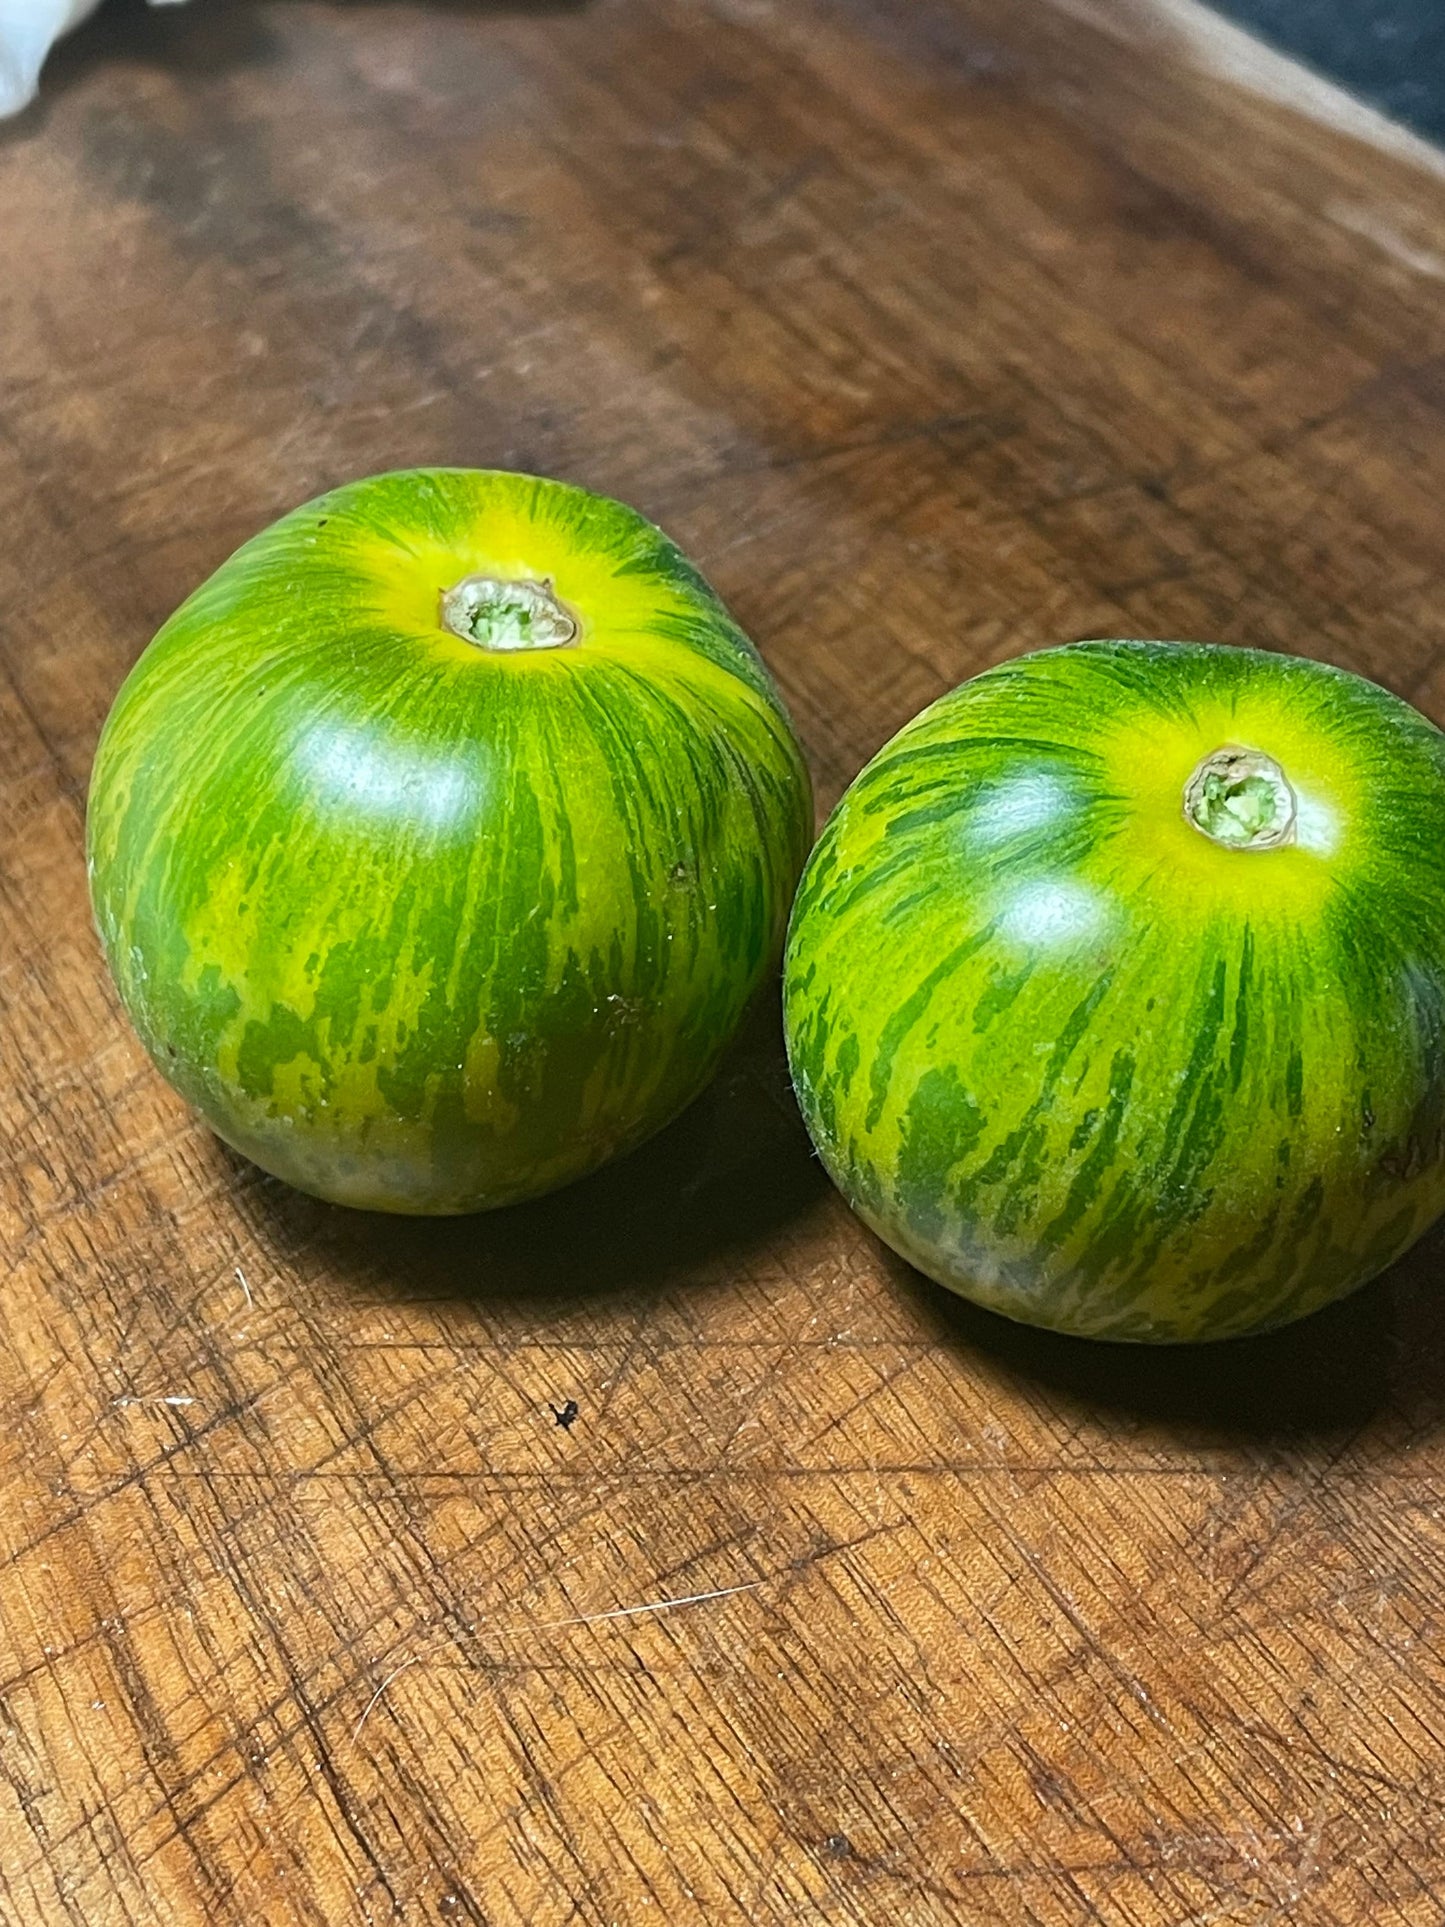 Green Zebra - Tomato Seeds - Heirloom Tomato - 25+ Seeds